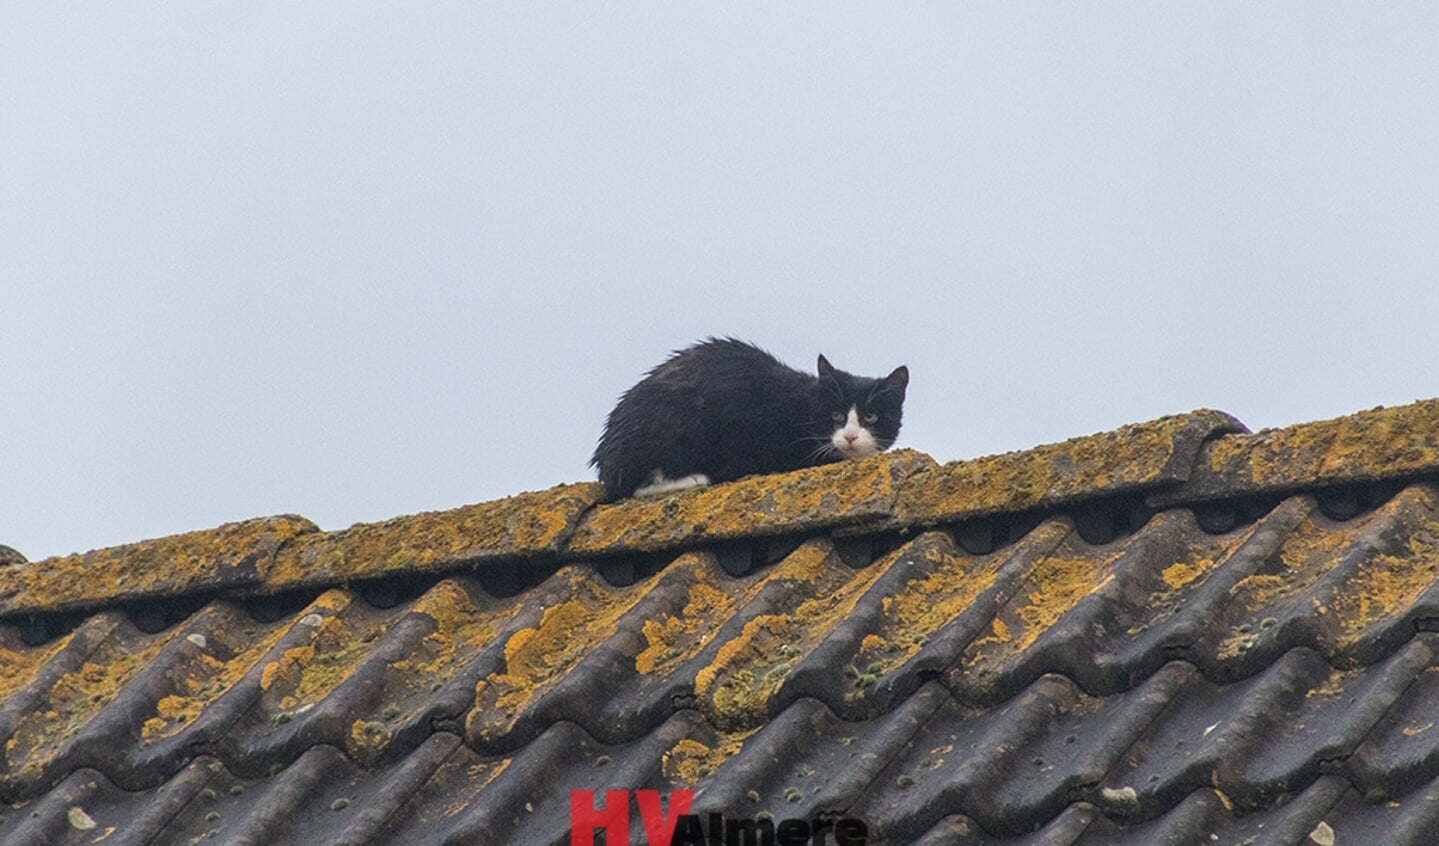 De angstige kat op het dak. (Foto: HV Almere)